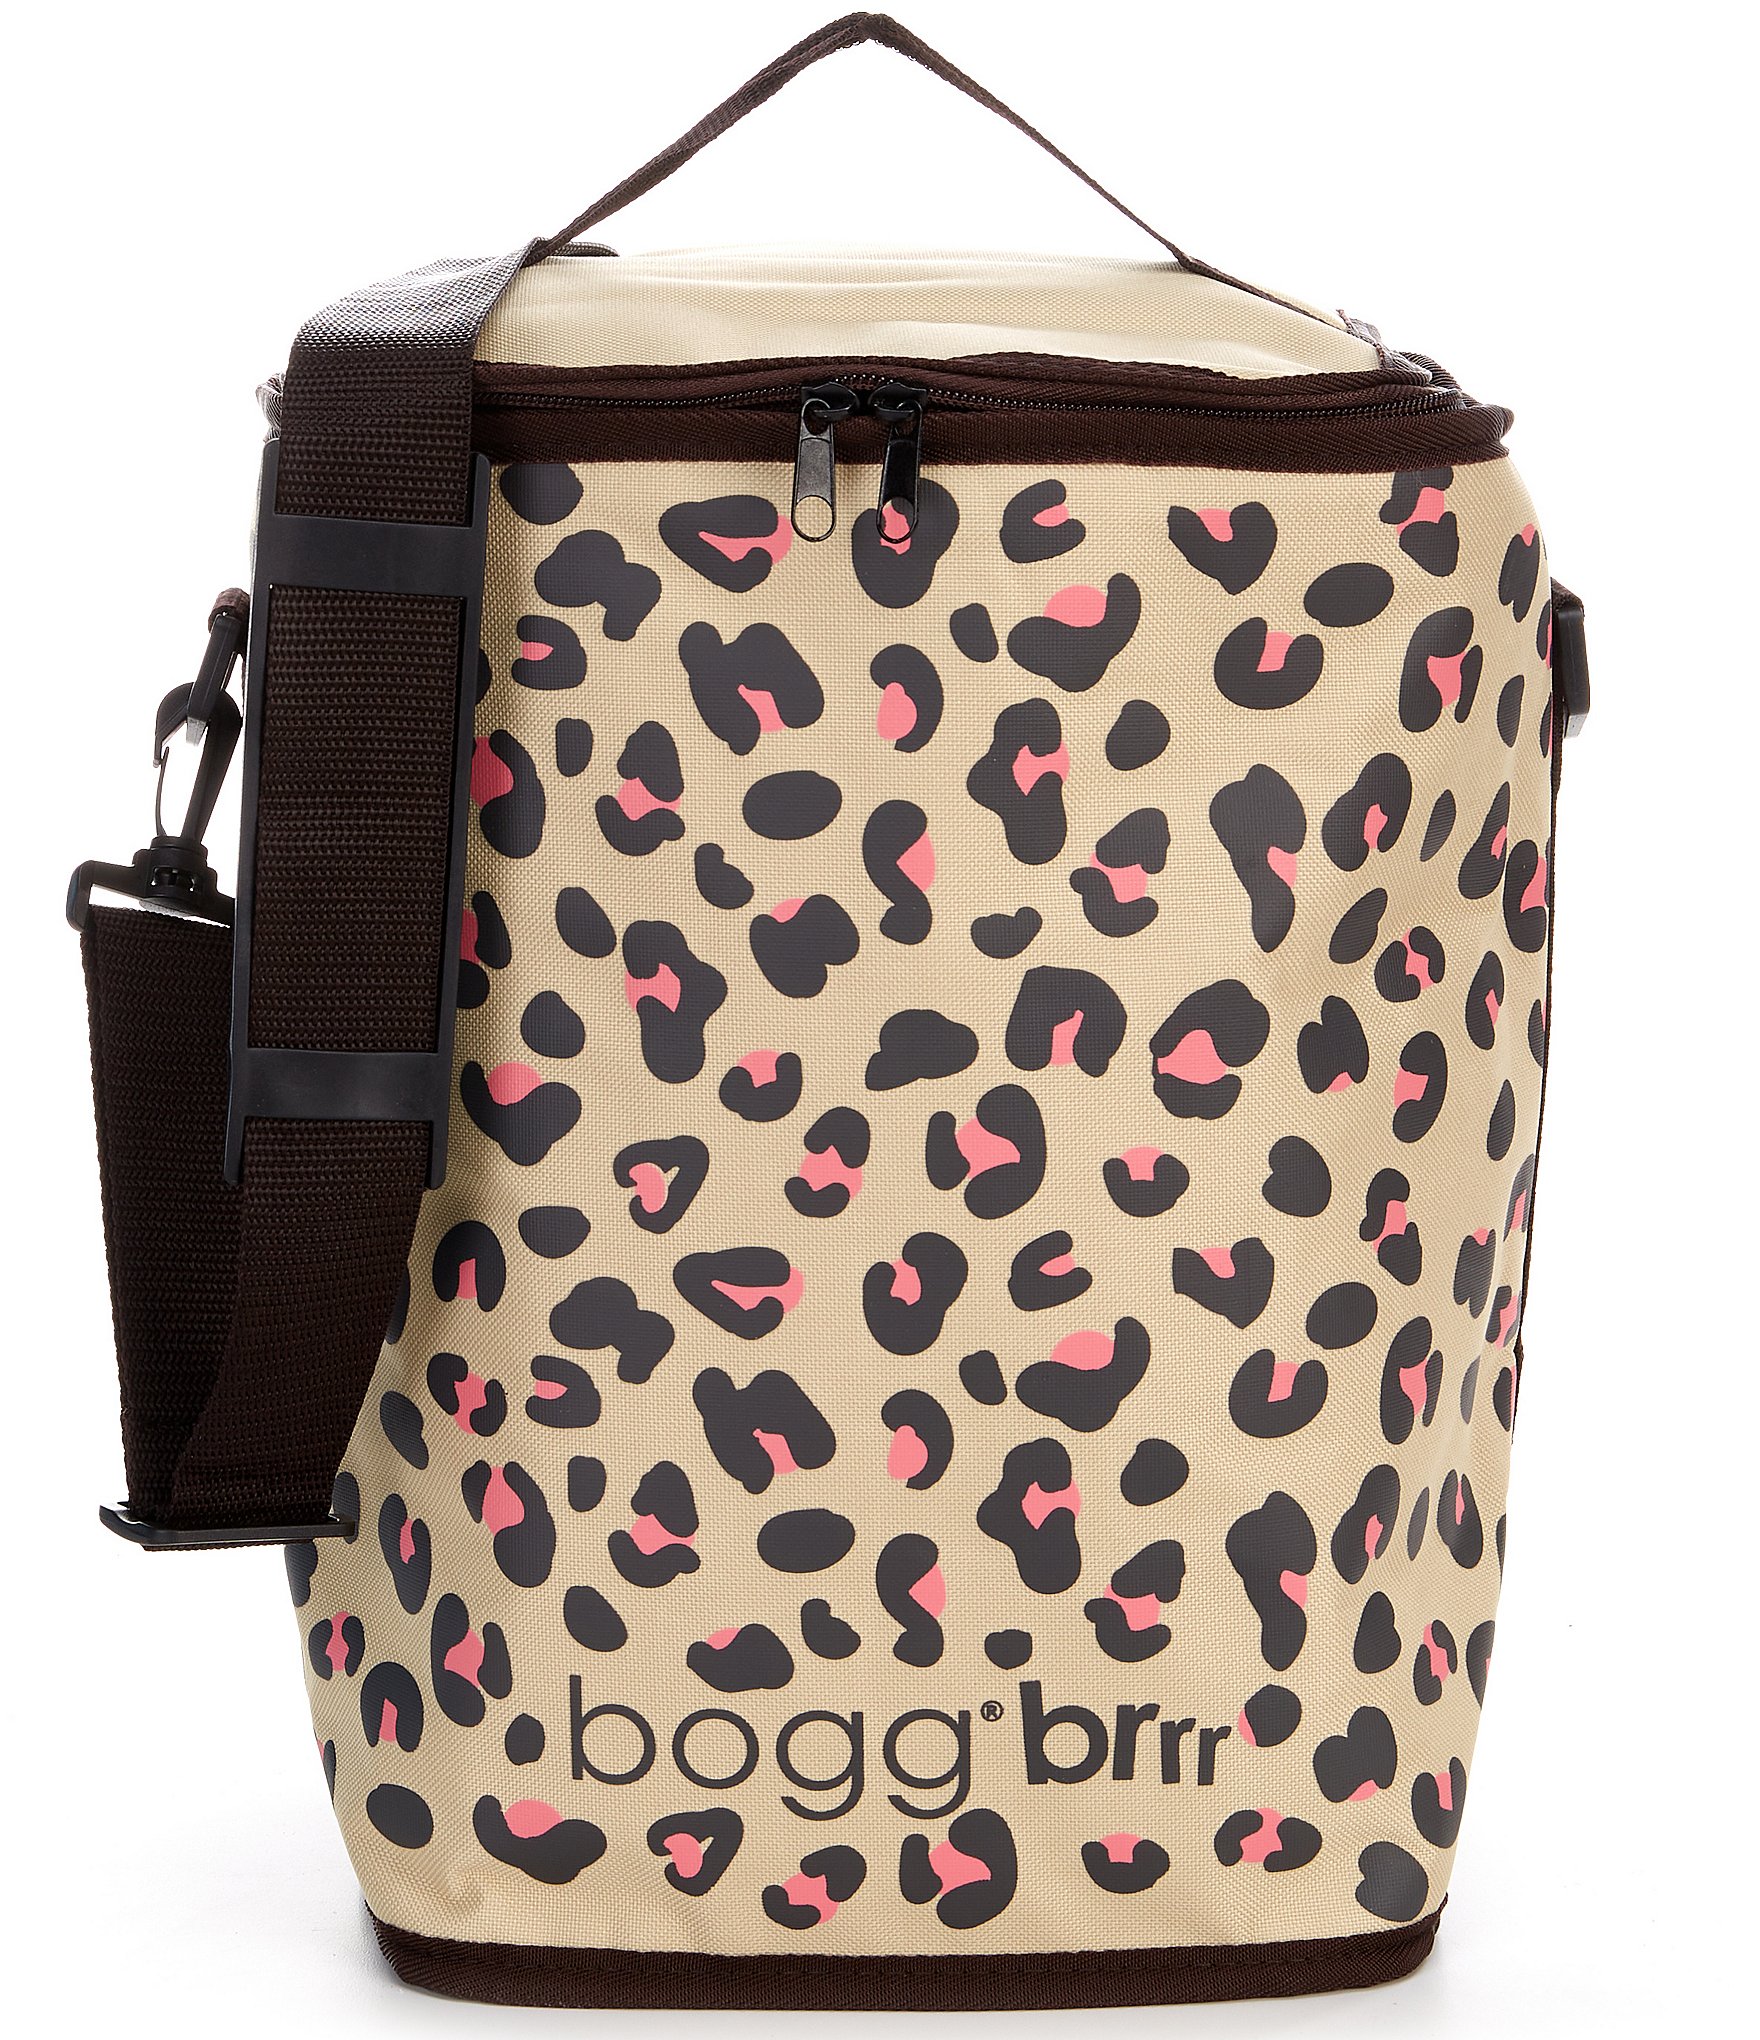 Bogg® Bag Multi-Leopard Collection